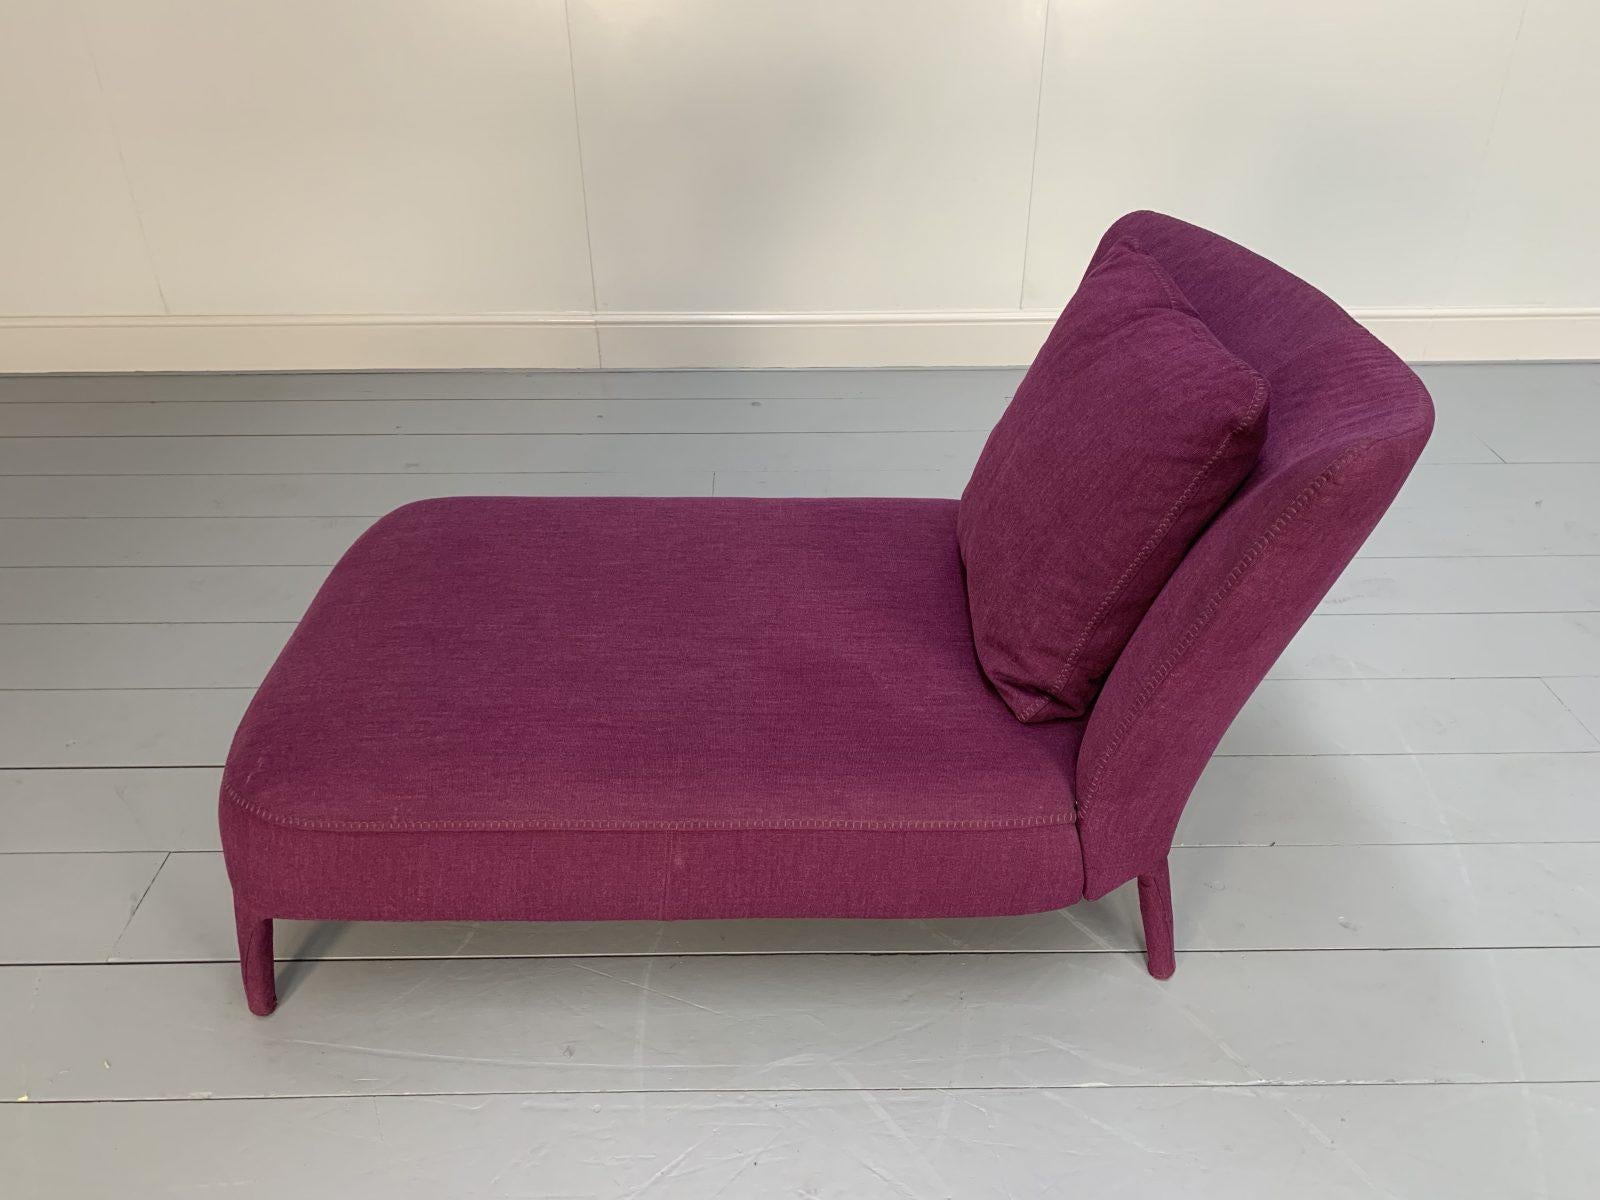 B&B Italia “Febo” Chaise Lounge Sofa in Violet “Enia” Chenille For Sale 1